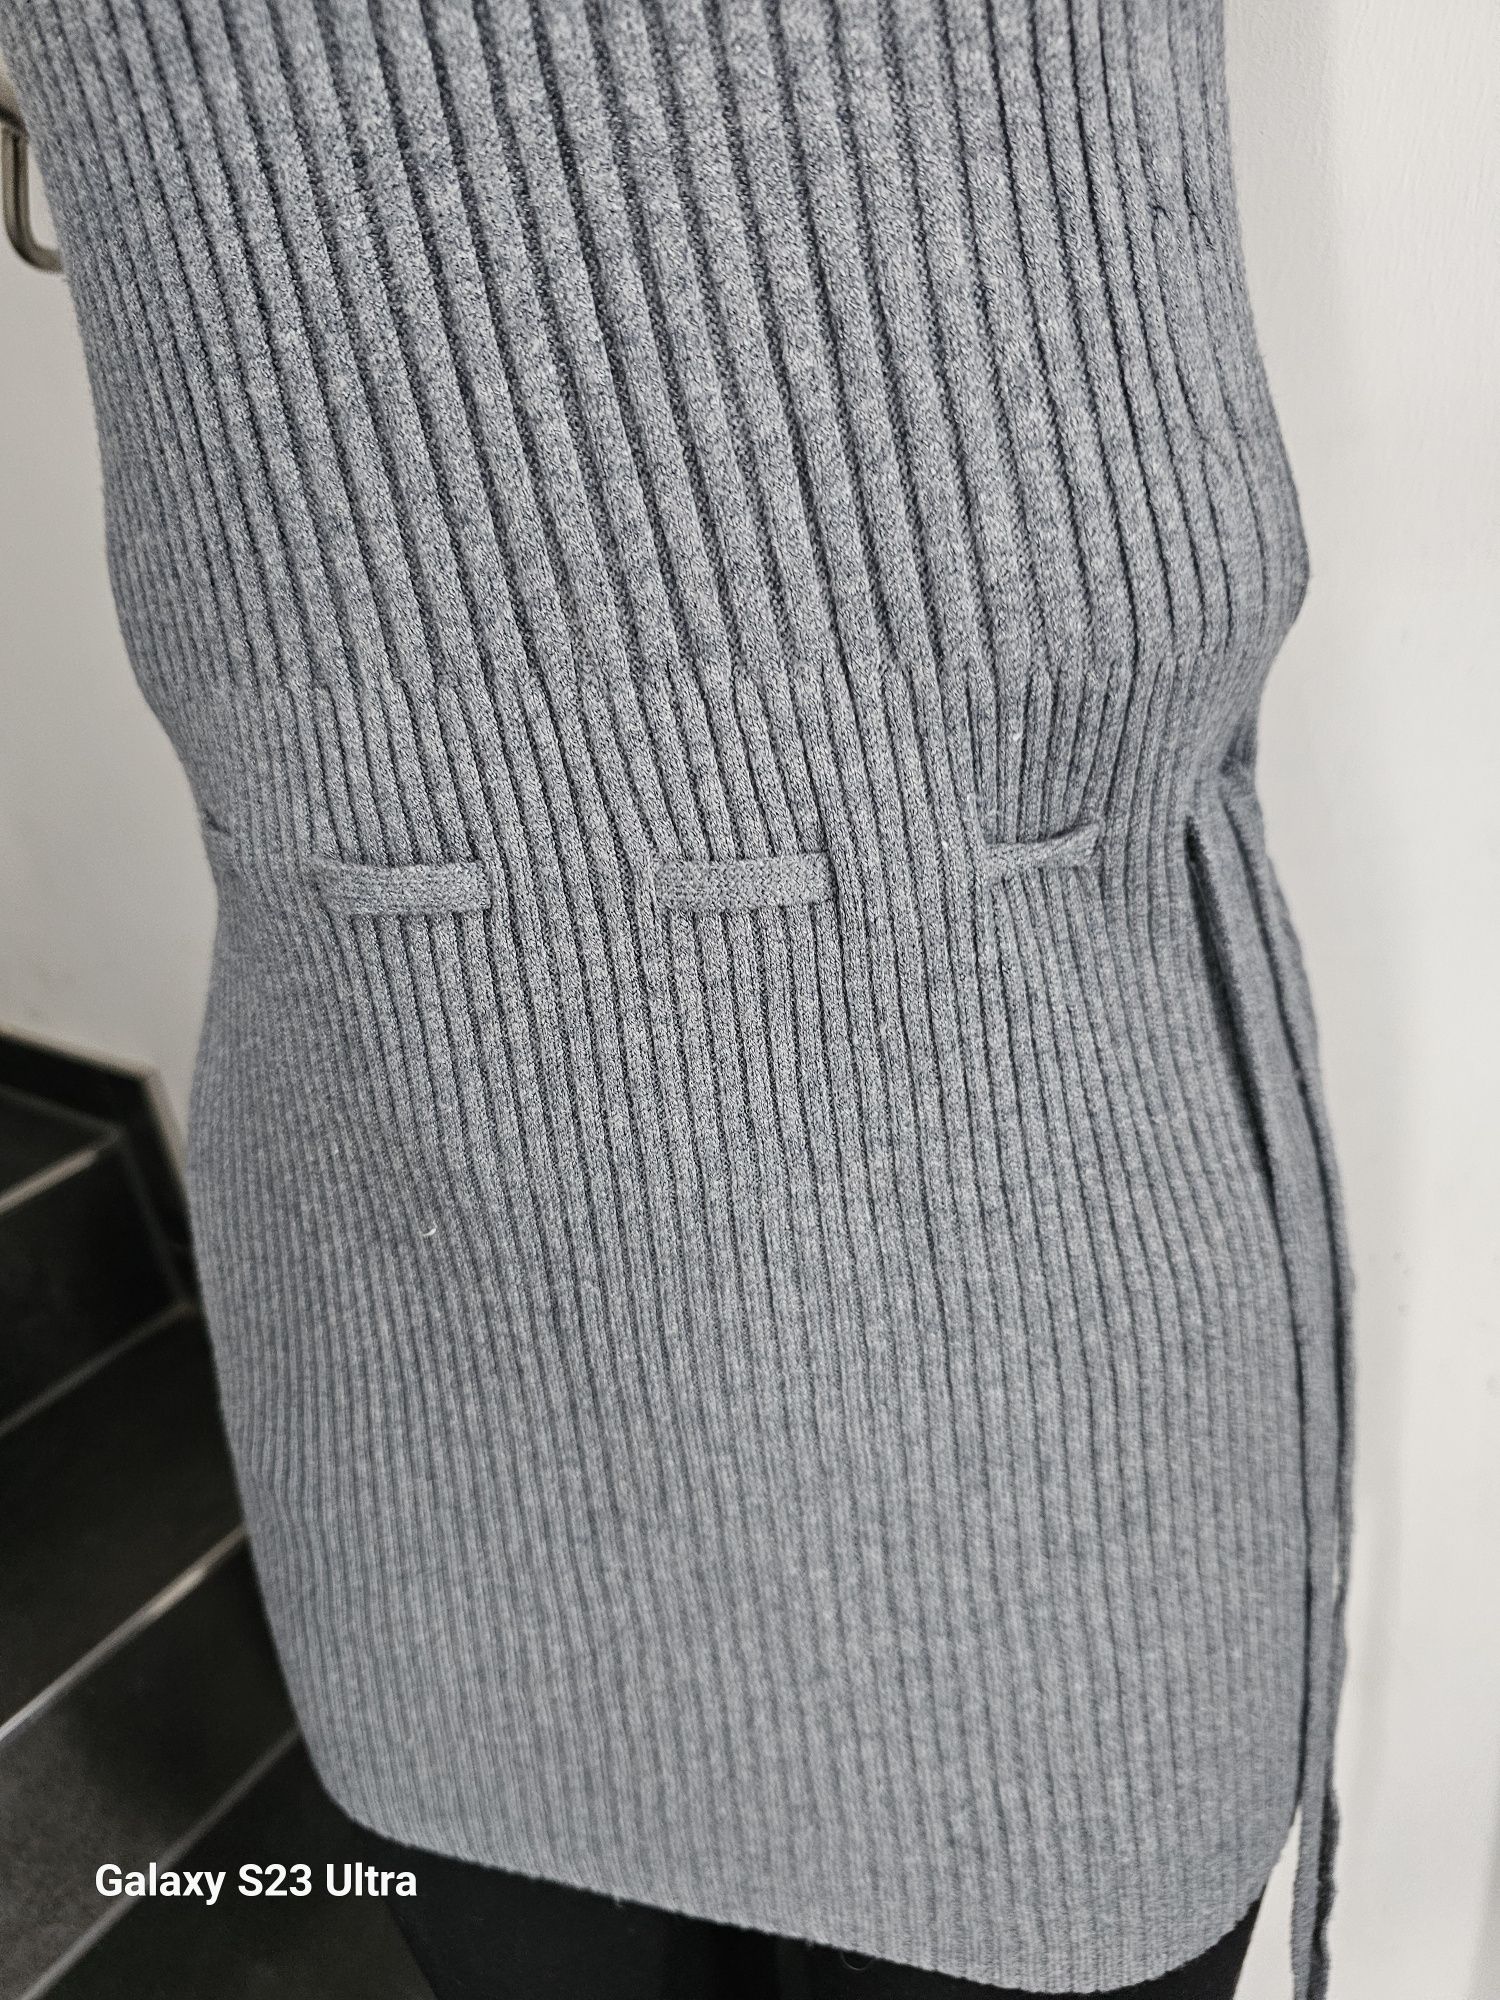 Tunika sweterkowa nowa L/XL